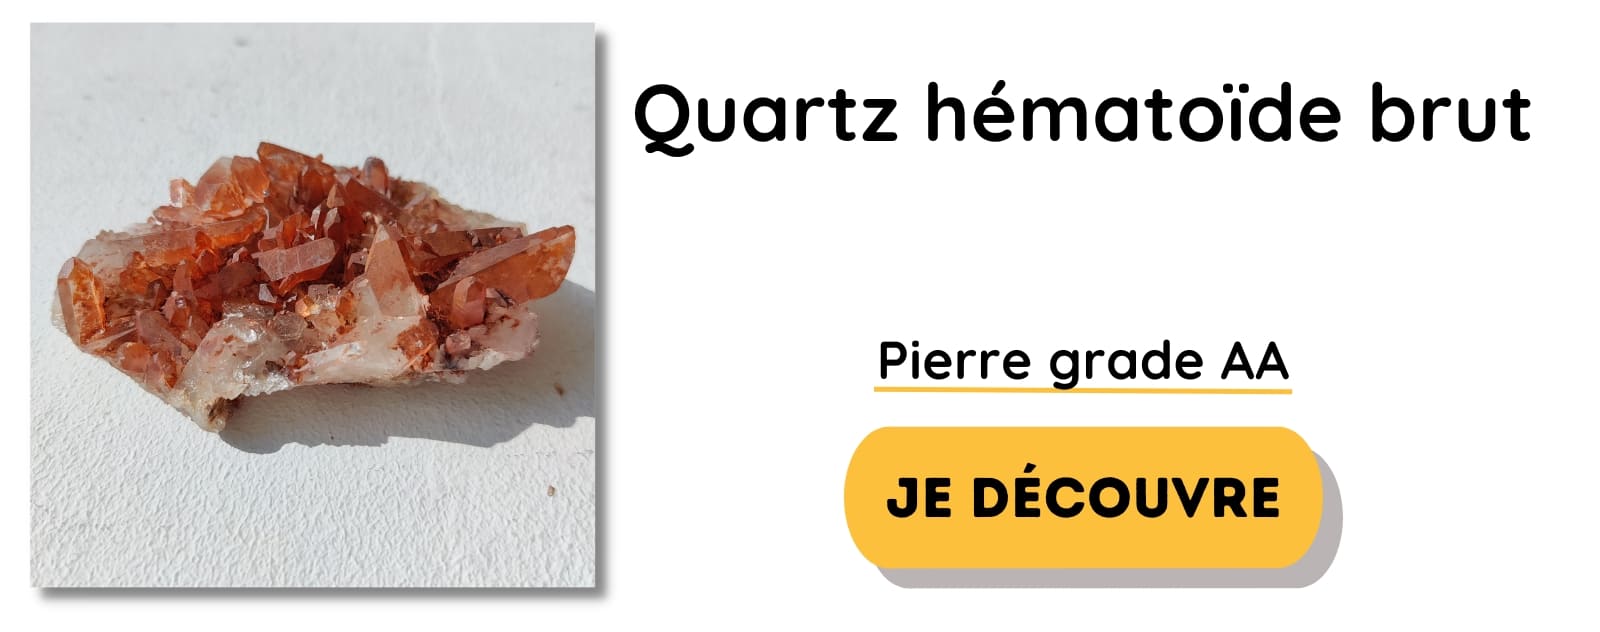 quartz hématoïde brut